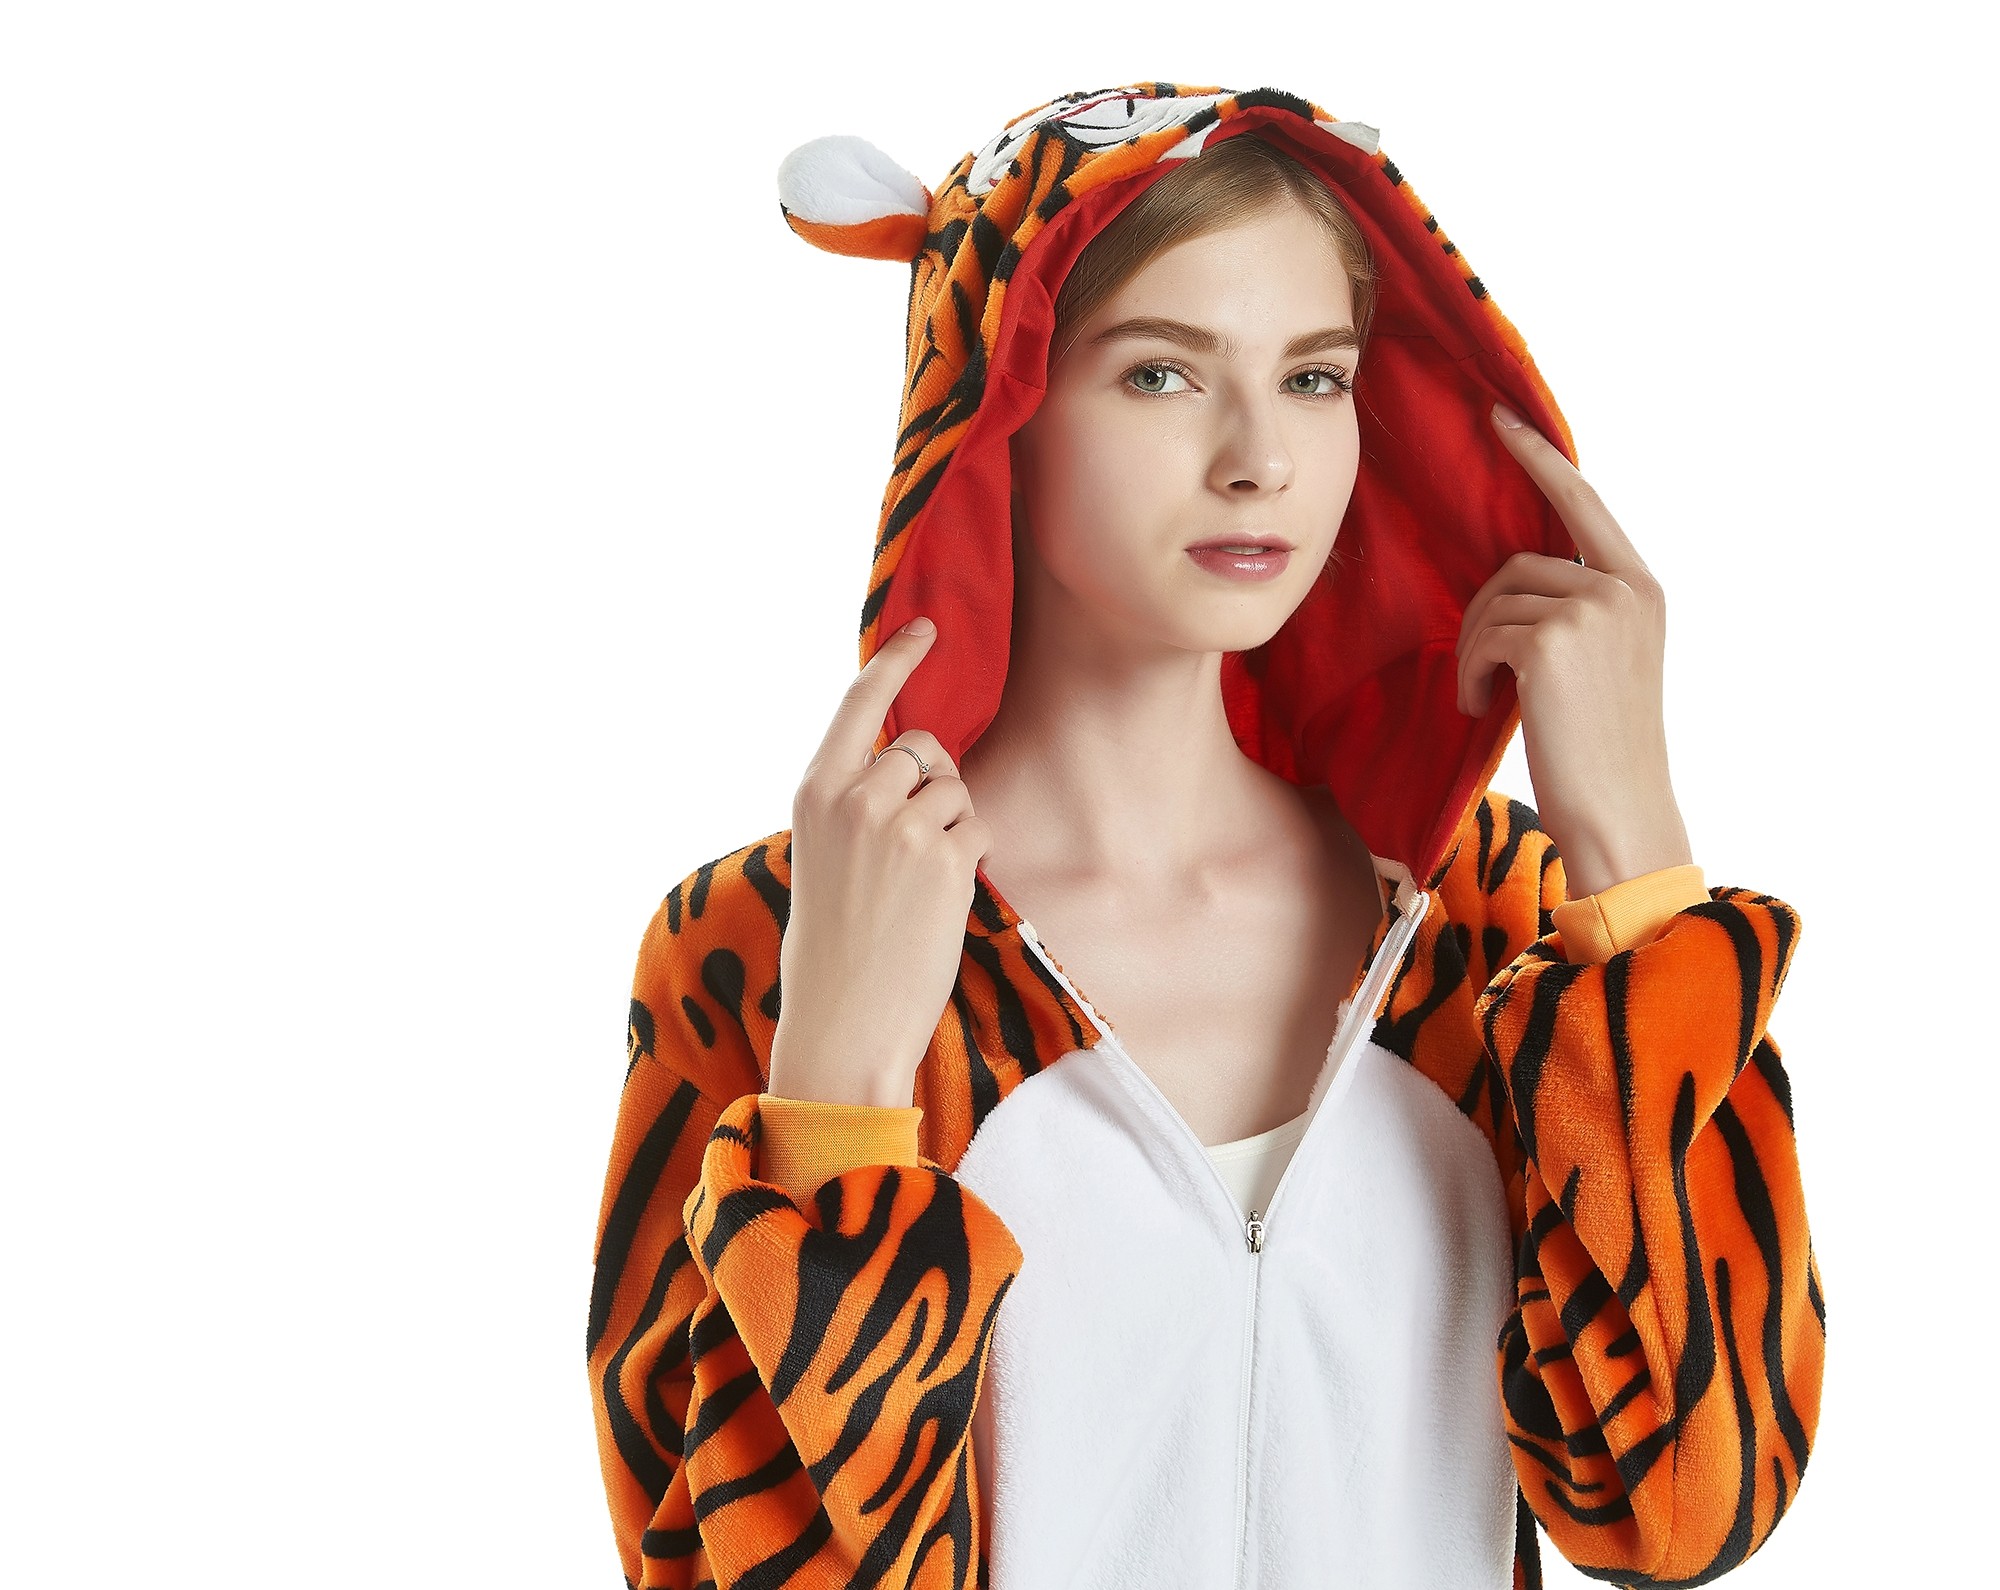 16pcs Animal Onesie Animal Pajamas Halloween Costumes Adult Tiger Wholesale Price